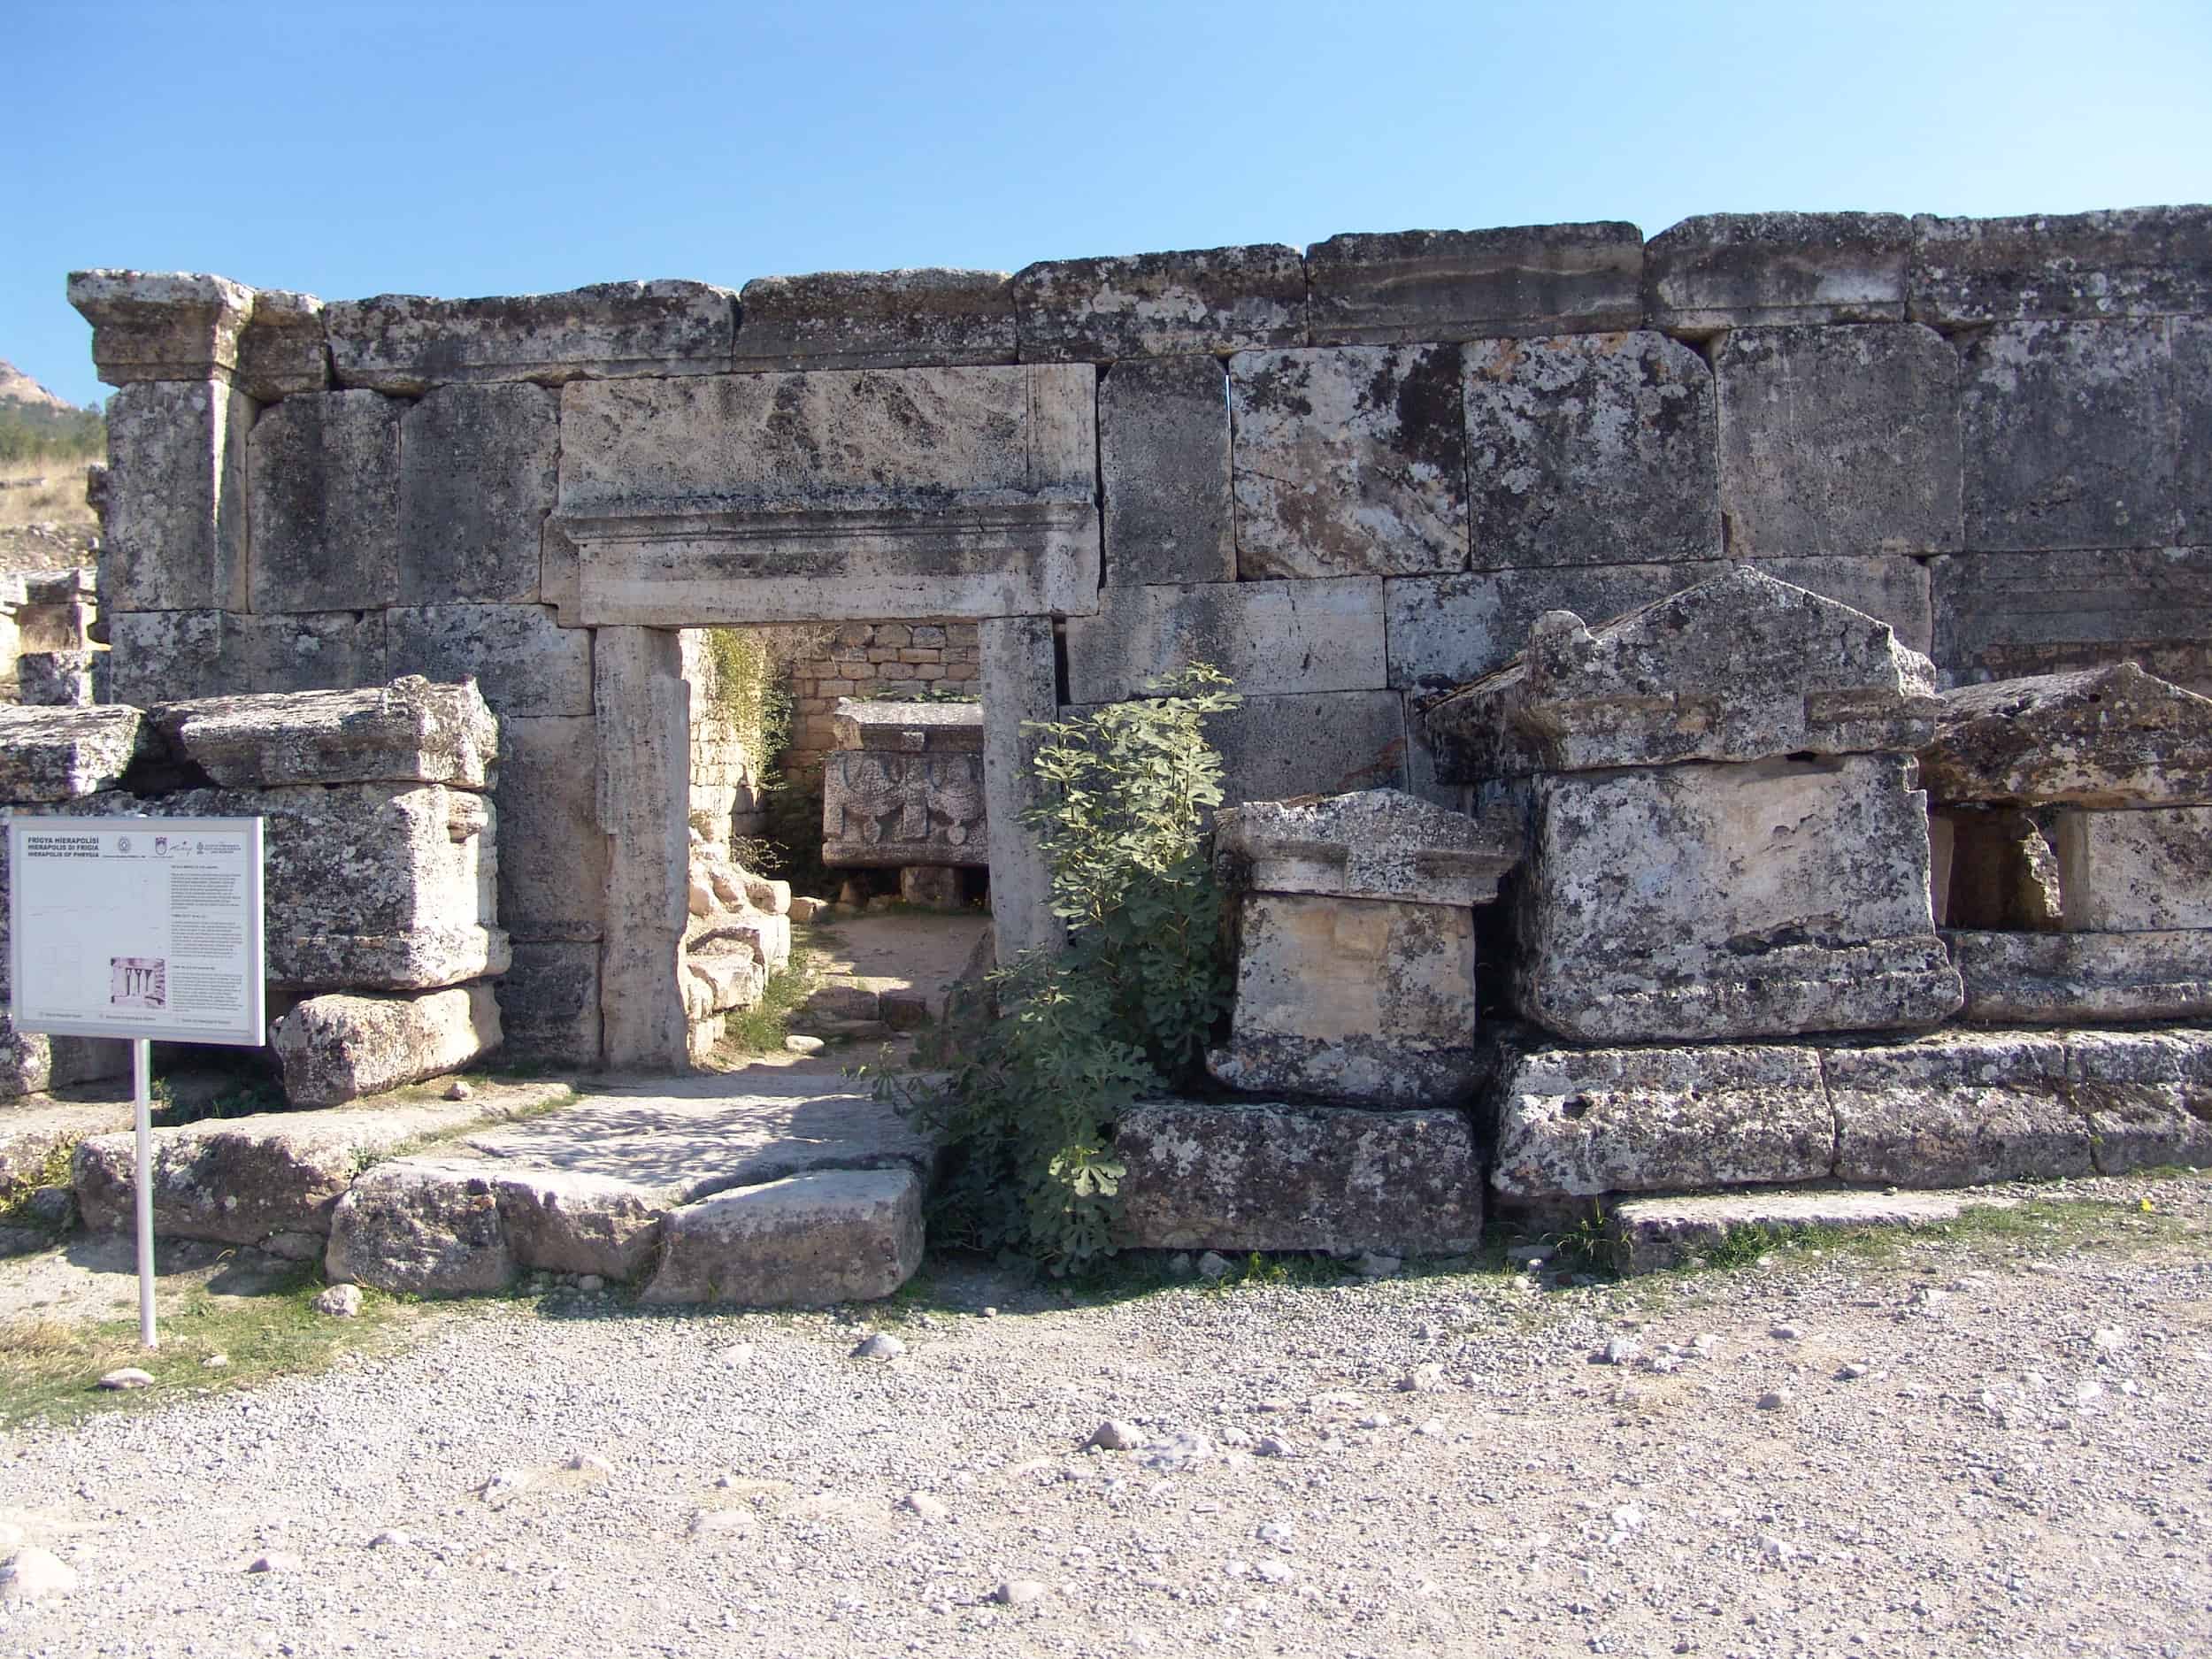 Tomb A6 at the Hierapolis Necropolis